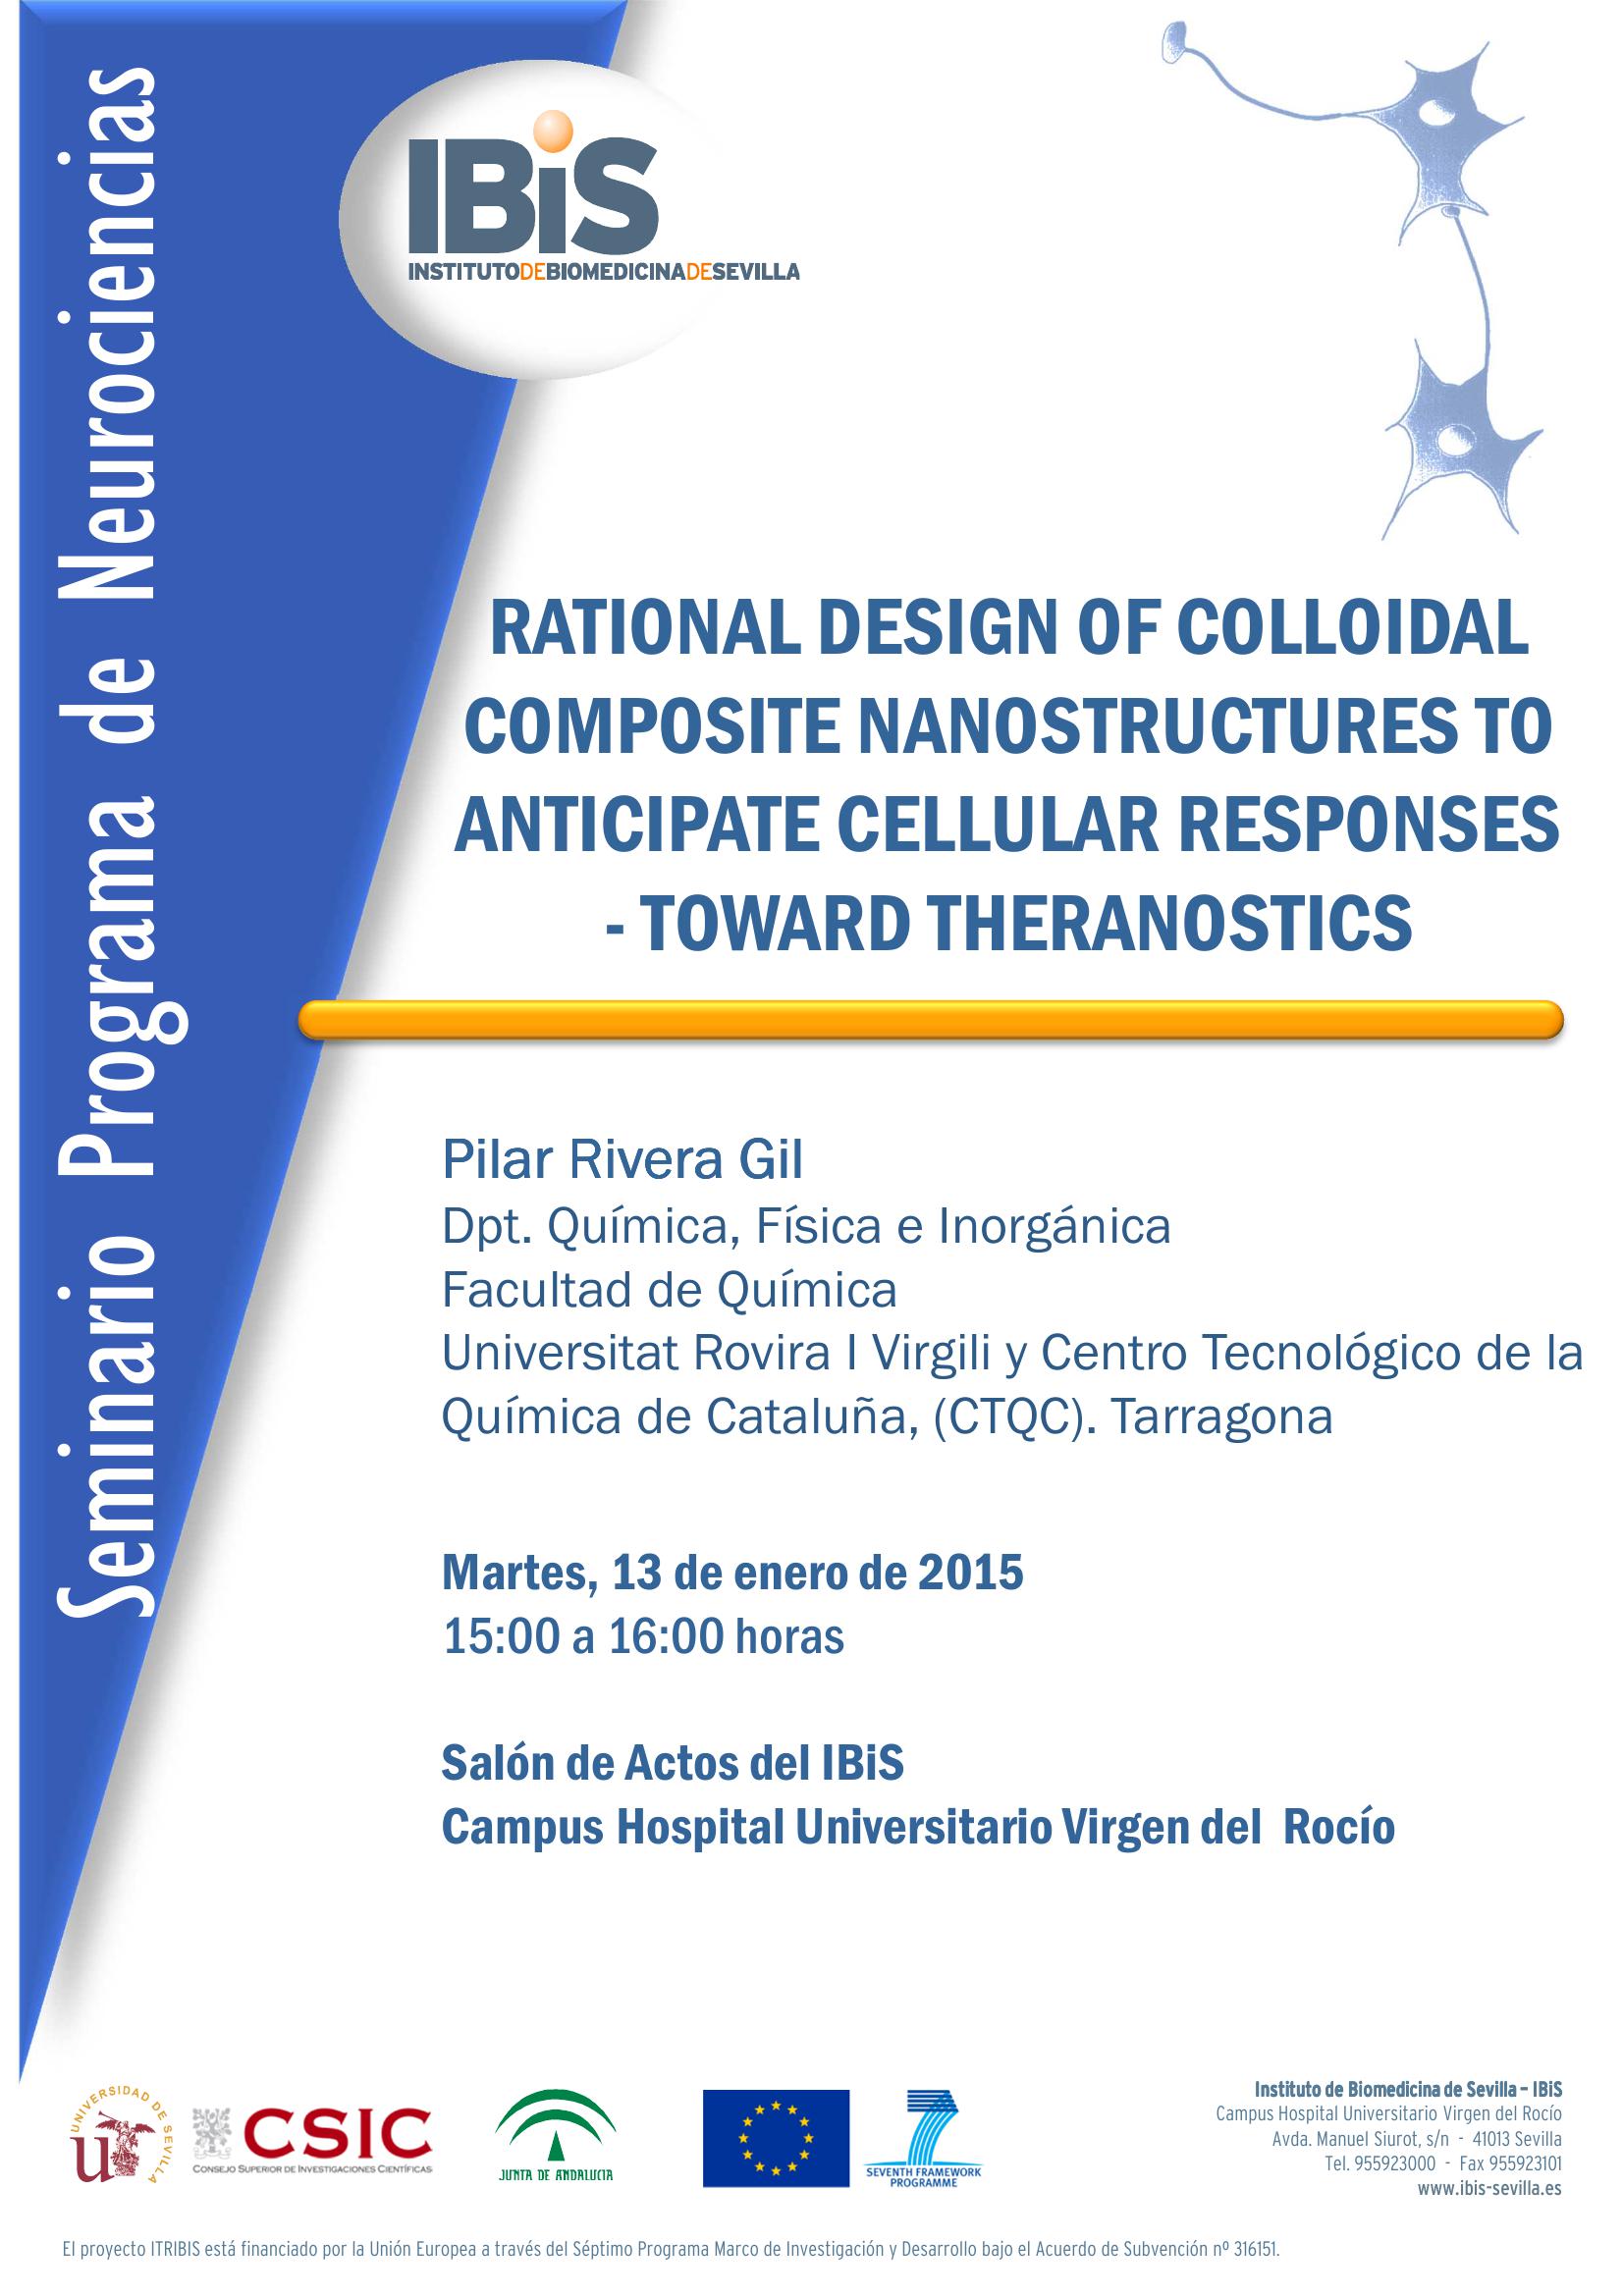 Poster: RATIONAL DESIGN OF COLLOIDAL COMPOSITE NANOSTRUCTURES TO ANTICIPATE CELLULAR RESPONSES - TOWARD THERANOSTICS